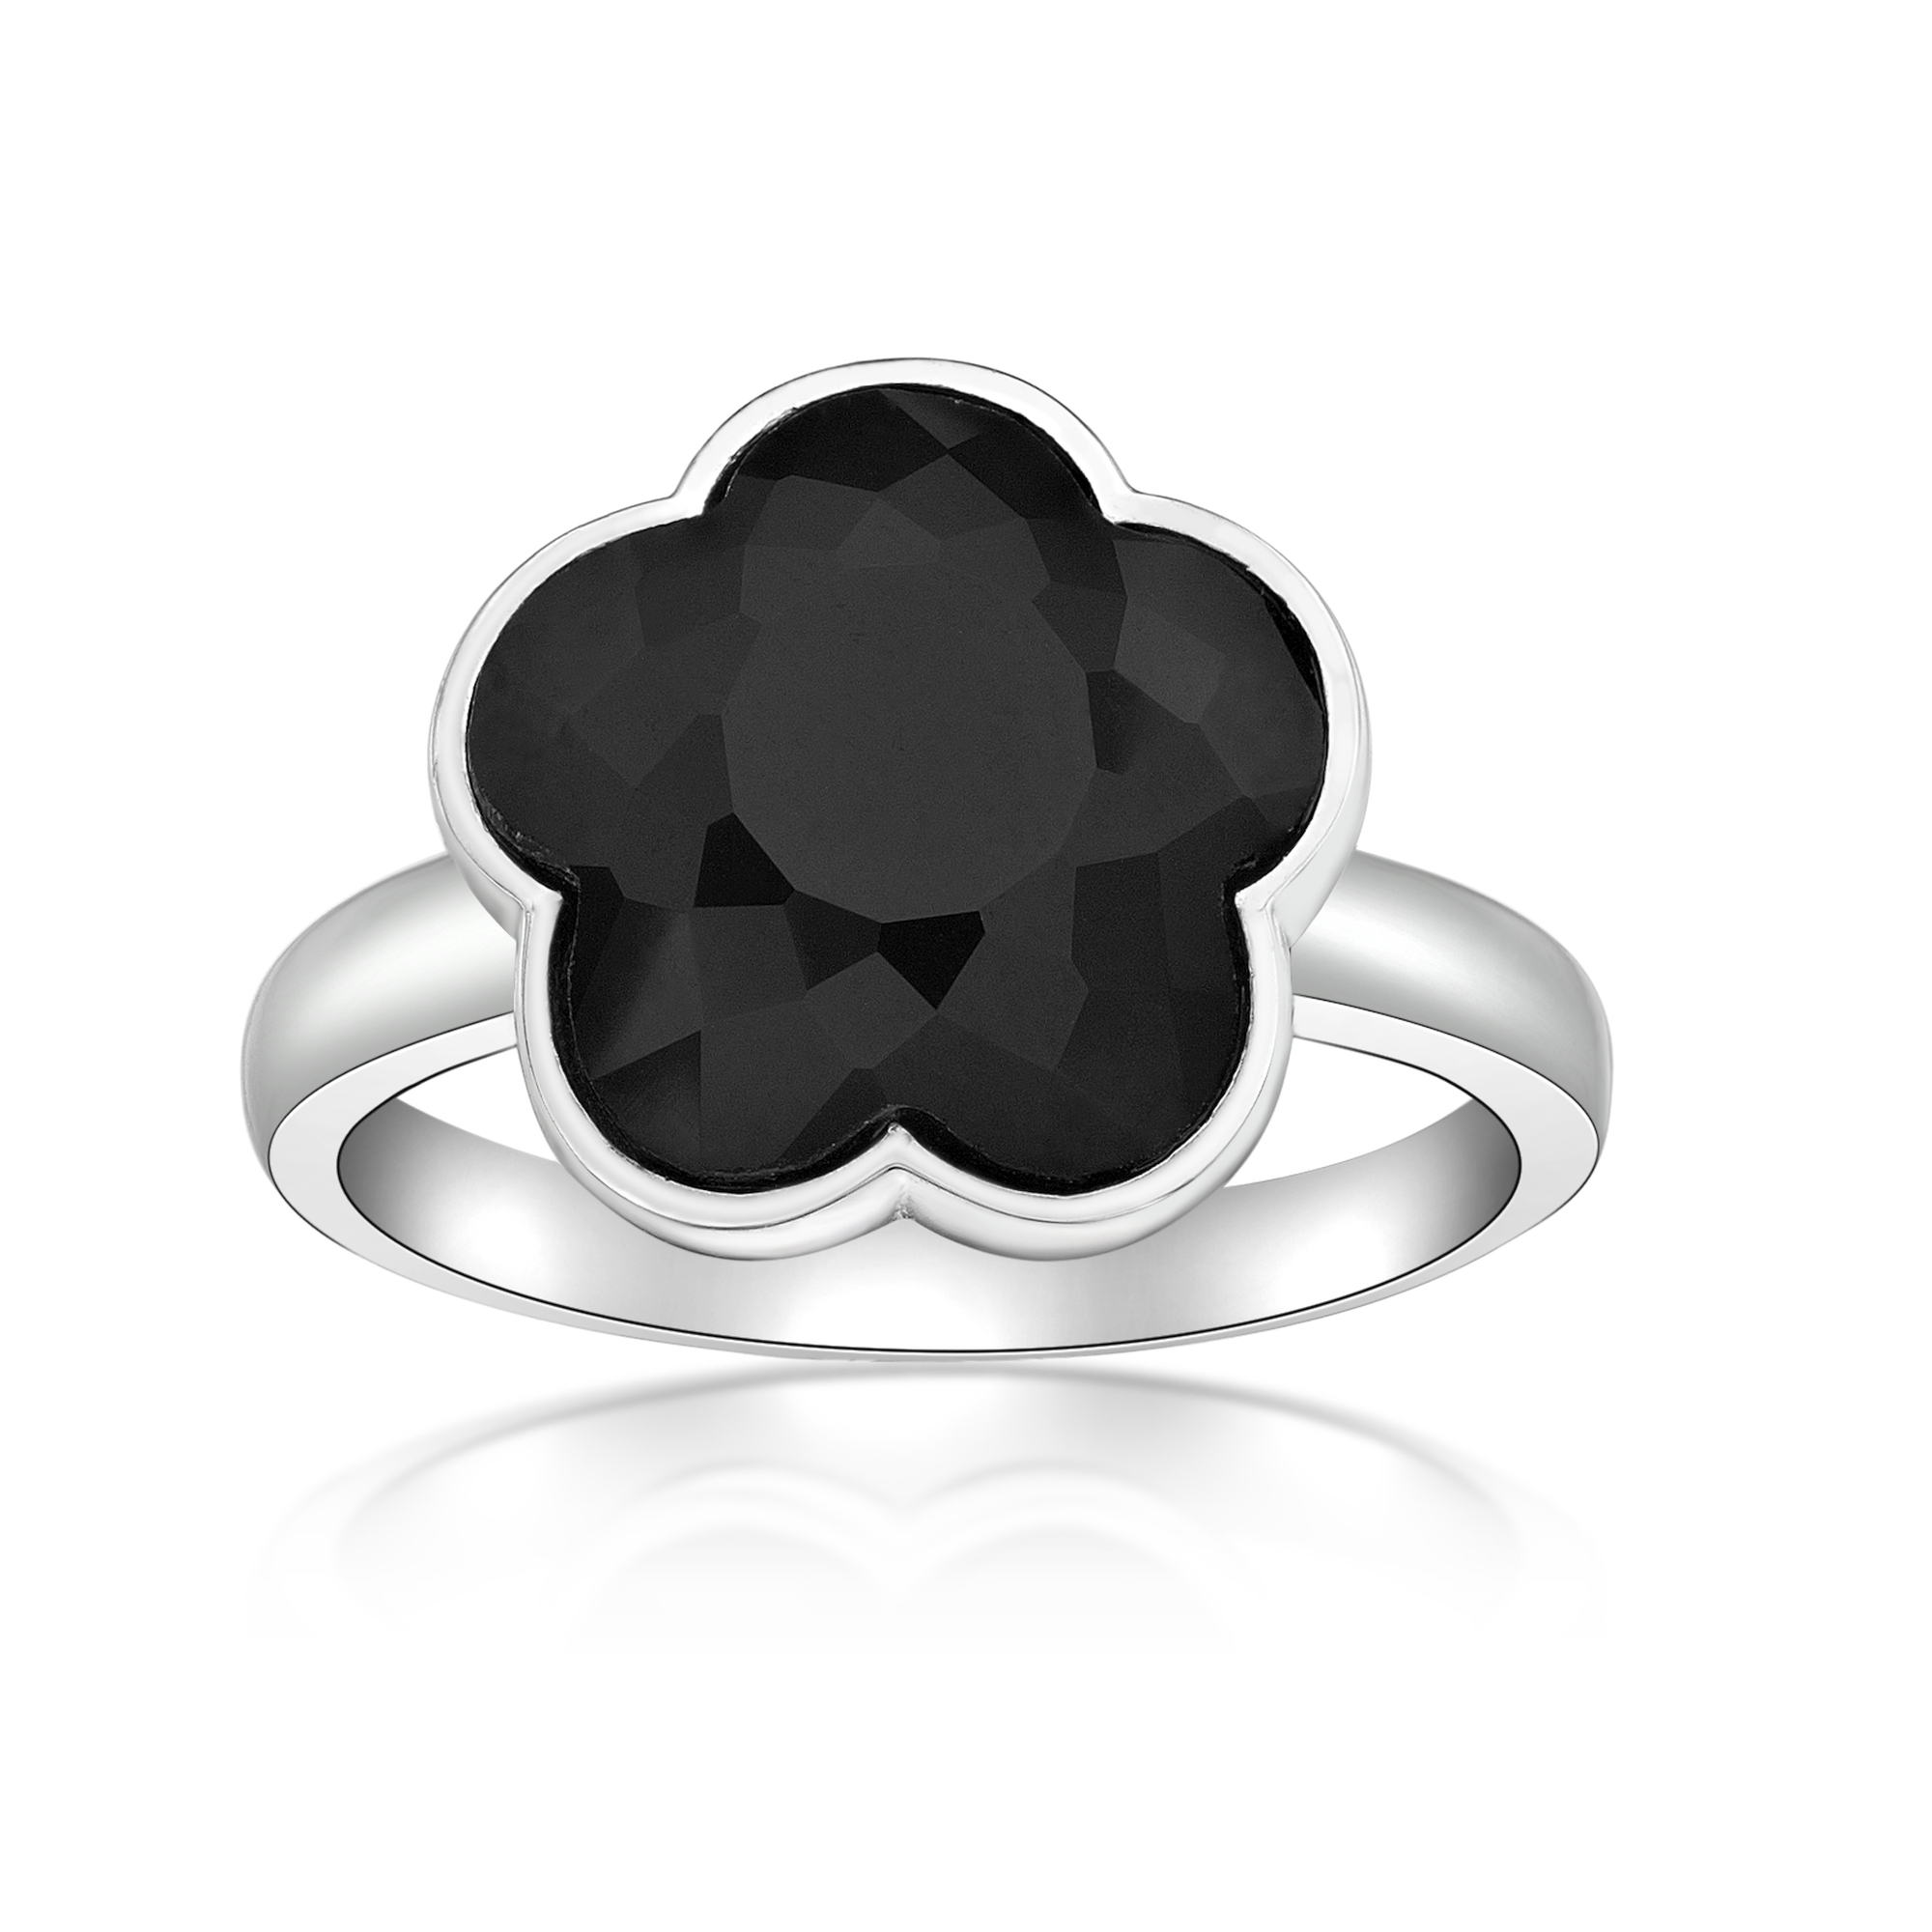 Lavari Jewelers Women’s Black Onyx Five Petal Flower Ring, 925 Sterling Silver, Size 6